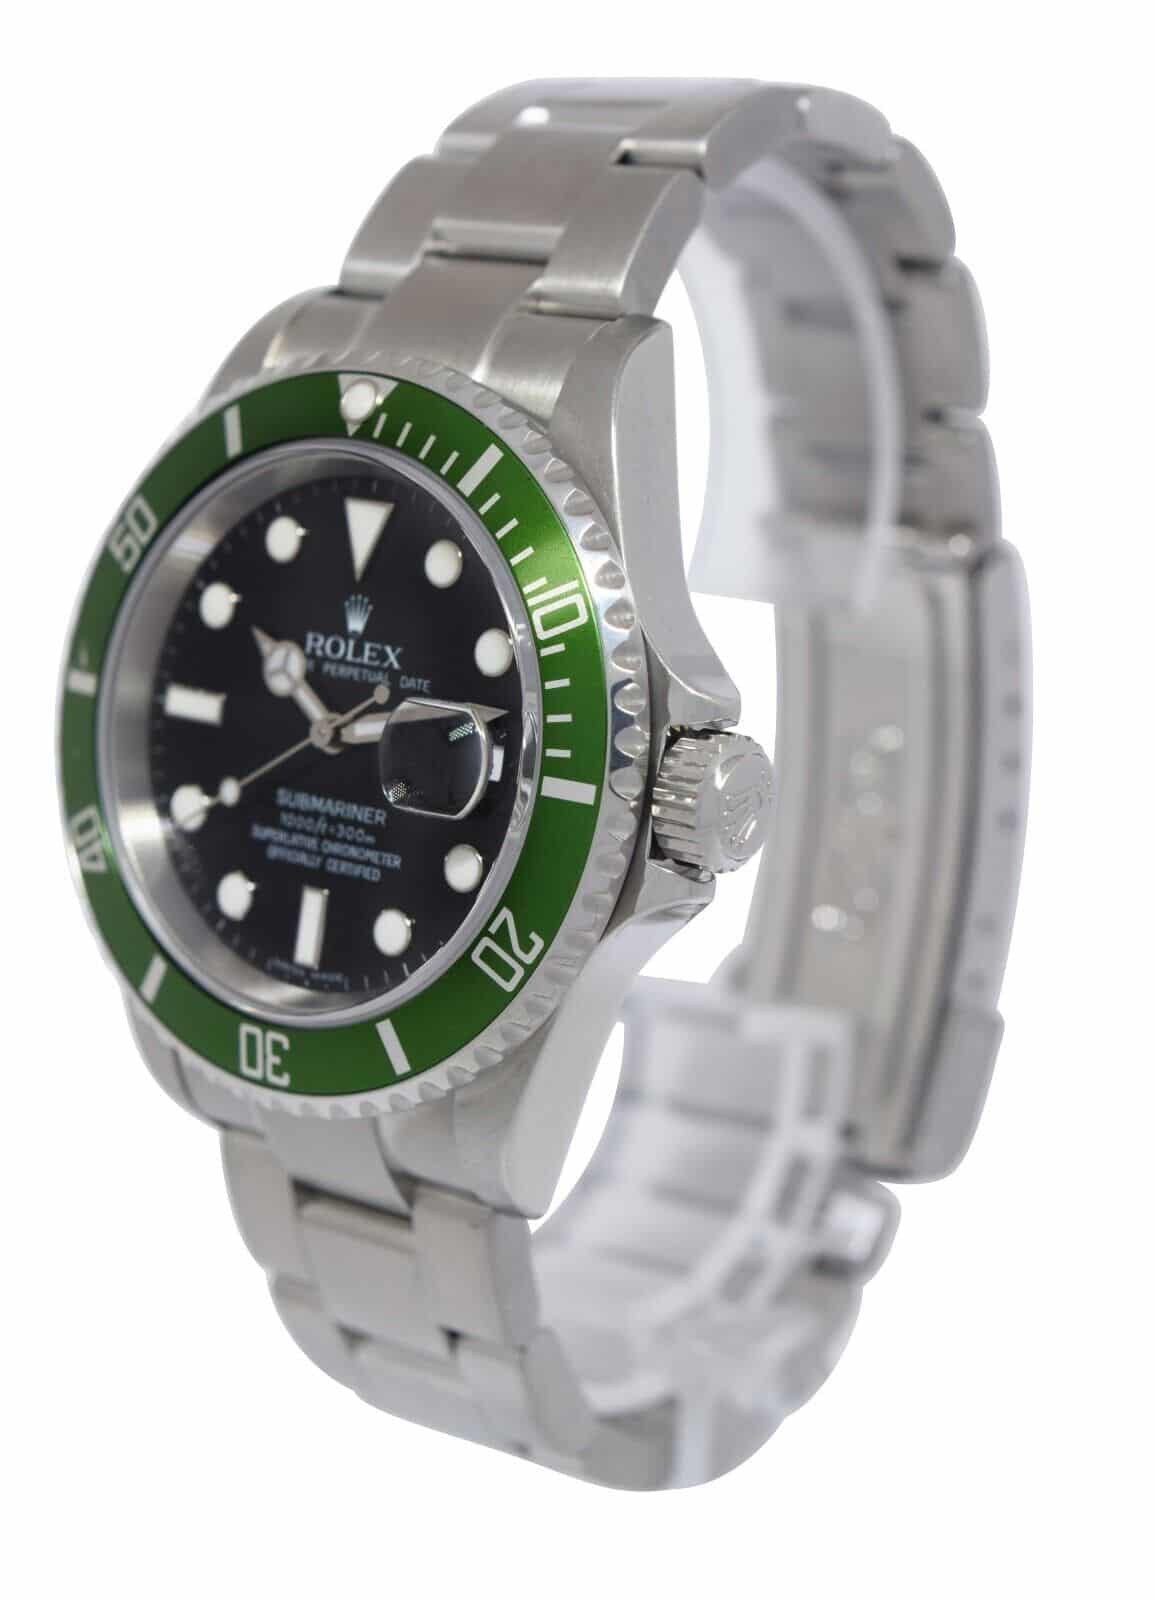 Rolex Submariner Date Kermit Green Bezel Steel Mens Automatic Watch Z 16610